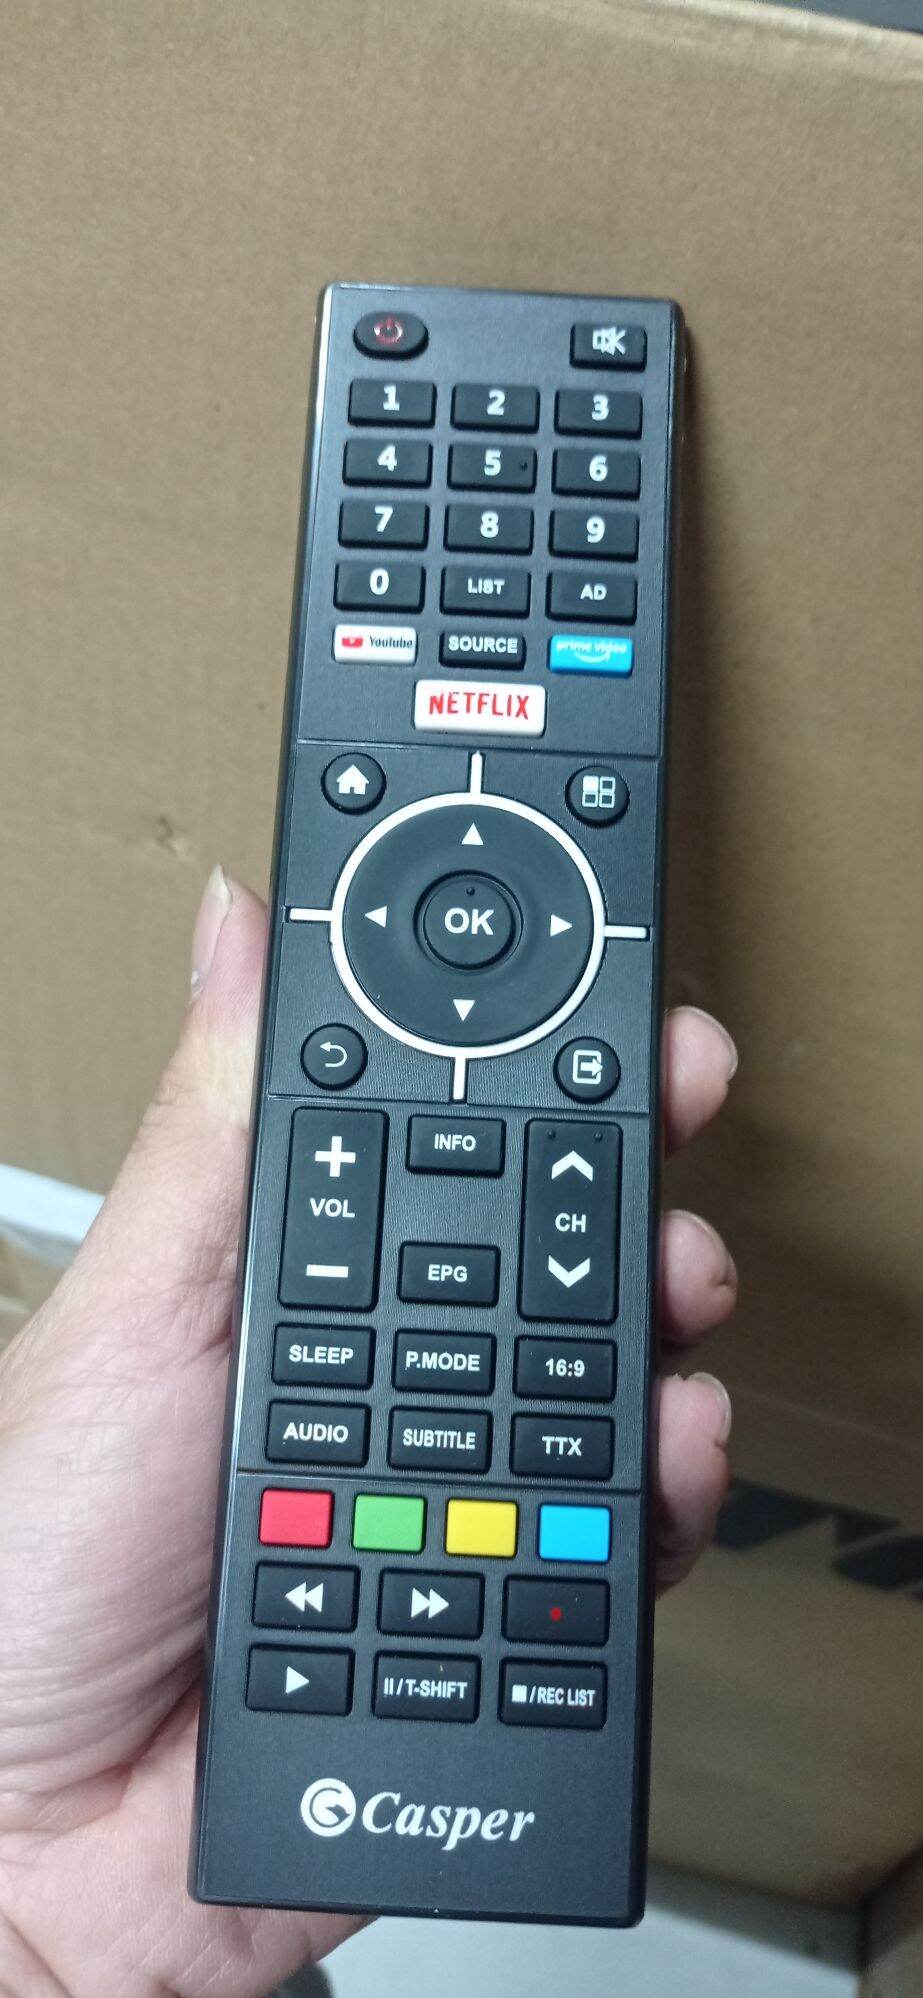 Remote cho smart tivi Casper - Hàng chính hãng Casper Việt Nam